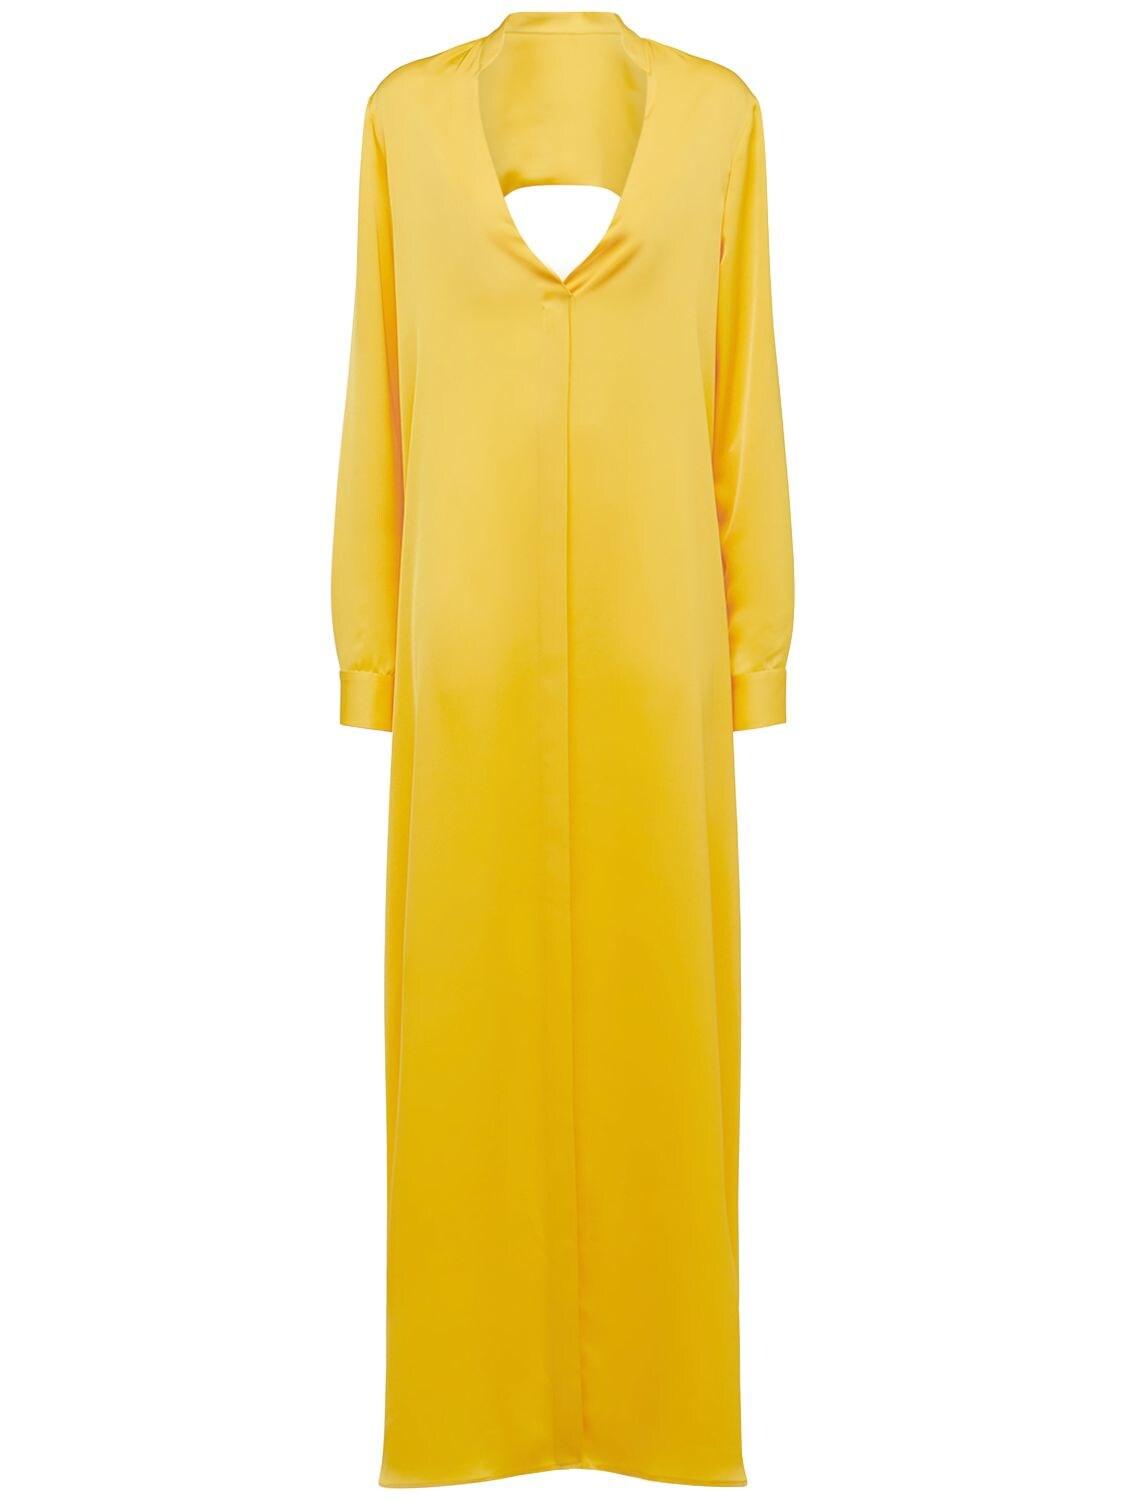 Costarellos Tania Satin Shirt Dress W/ Back Cutout in Yellow | Lyst Canada